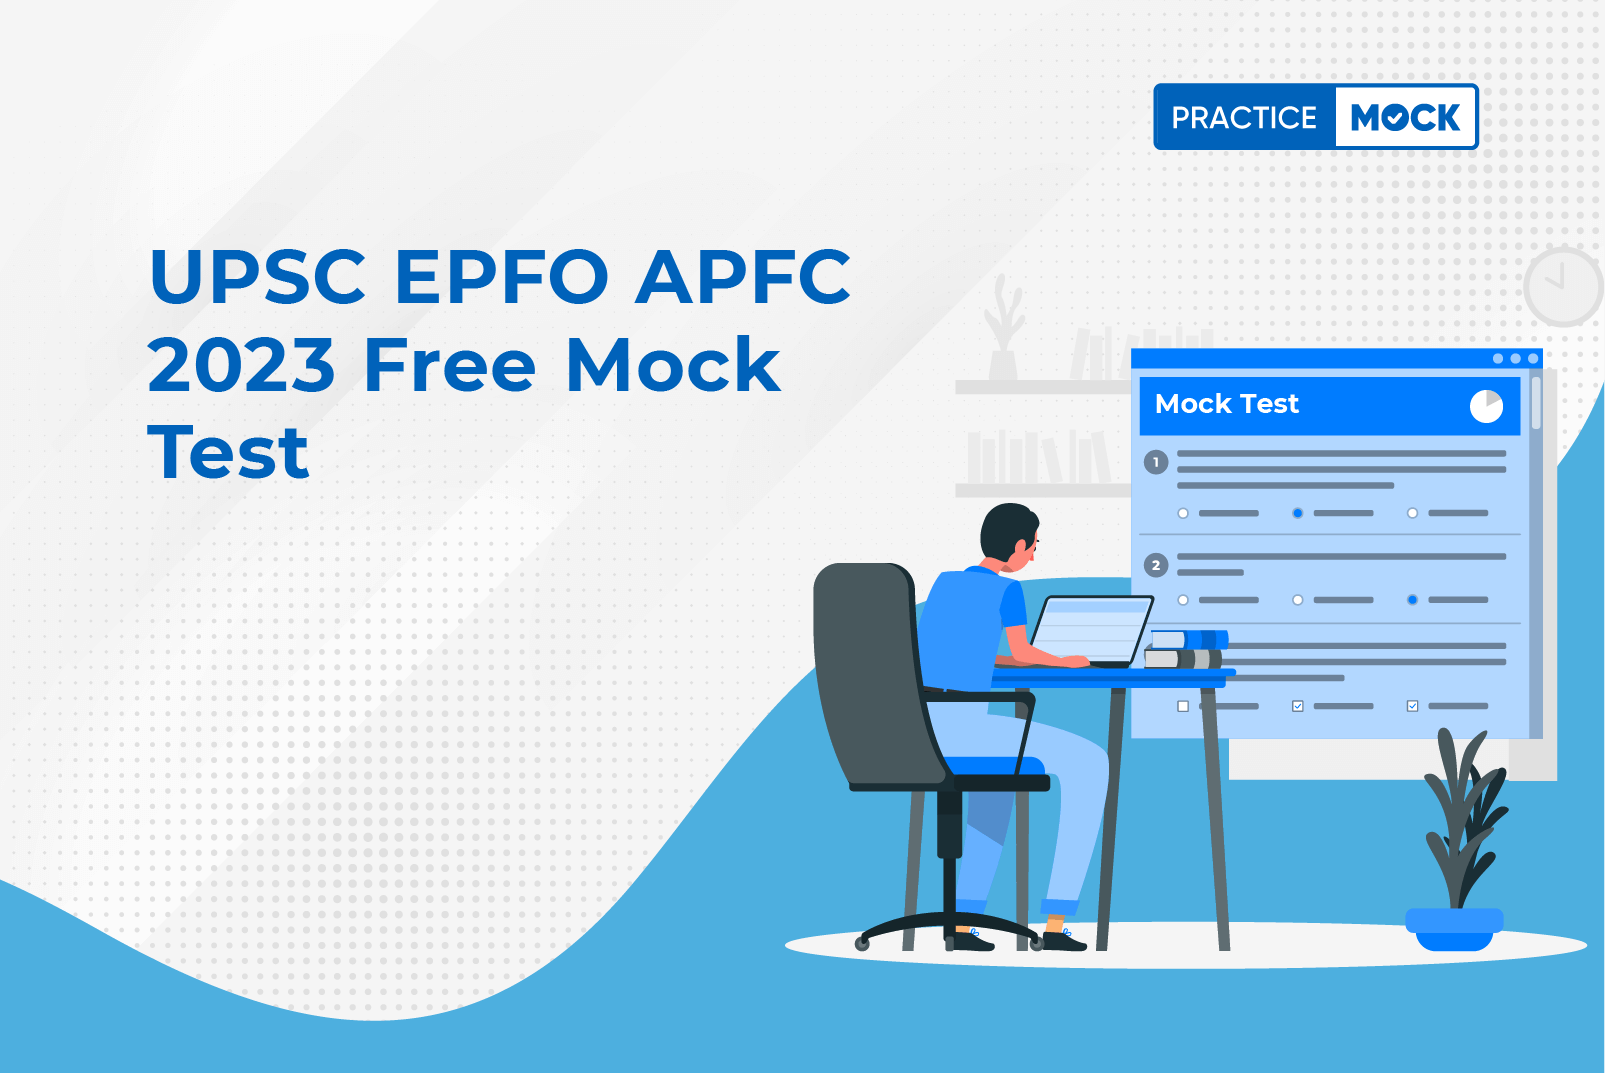 UPSC EPFO APFC 2023 Free Mock Test